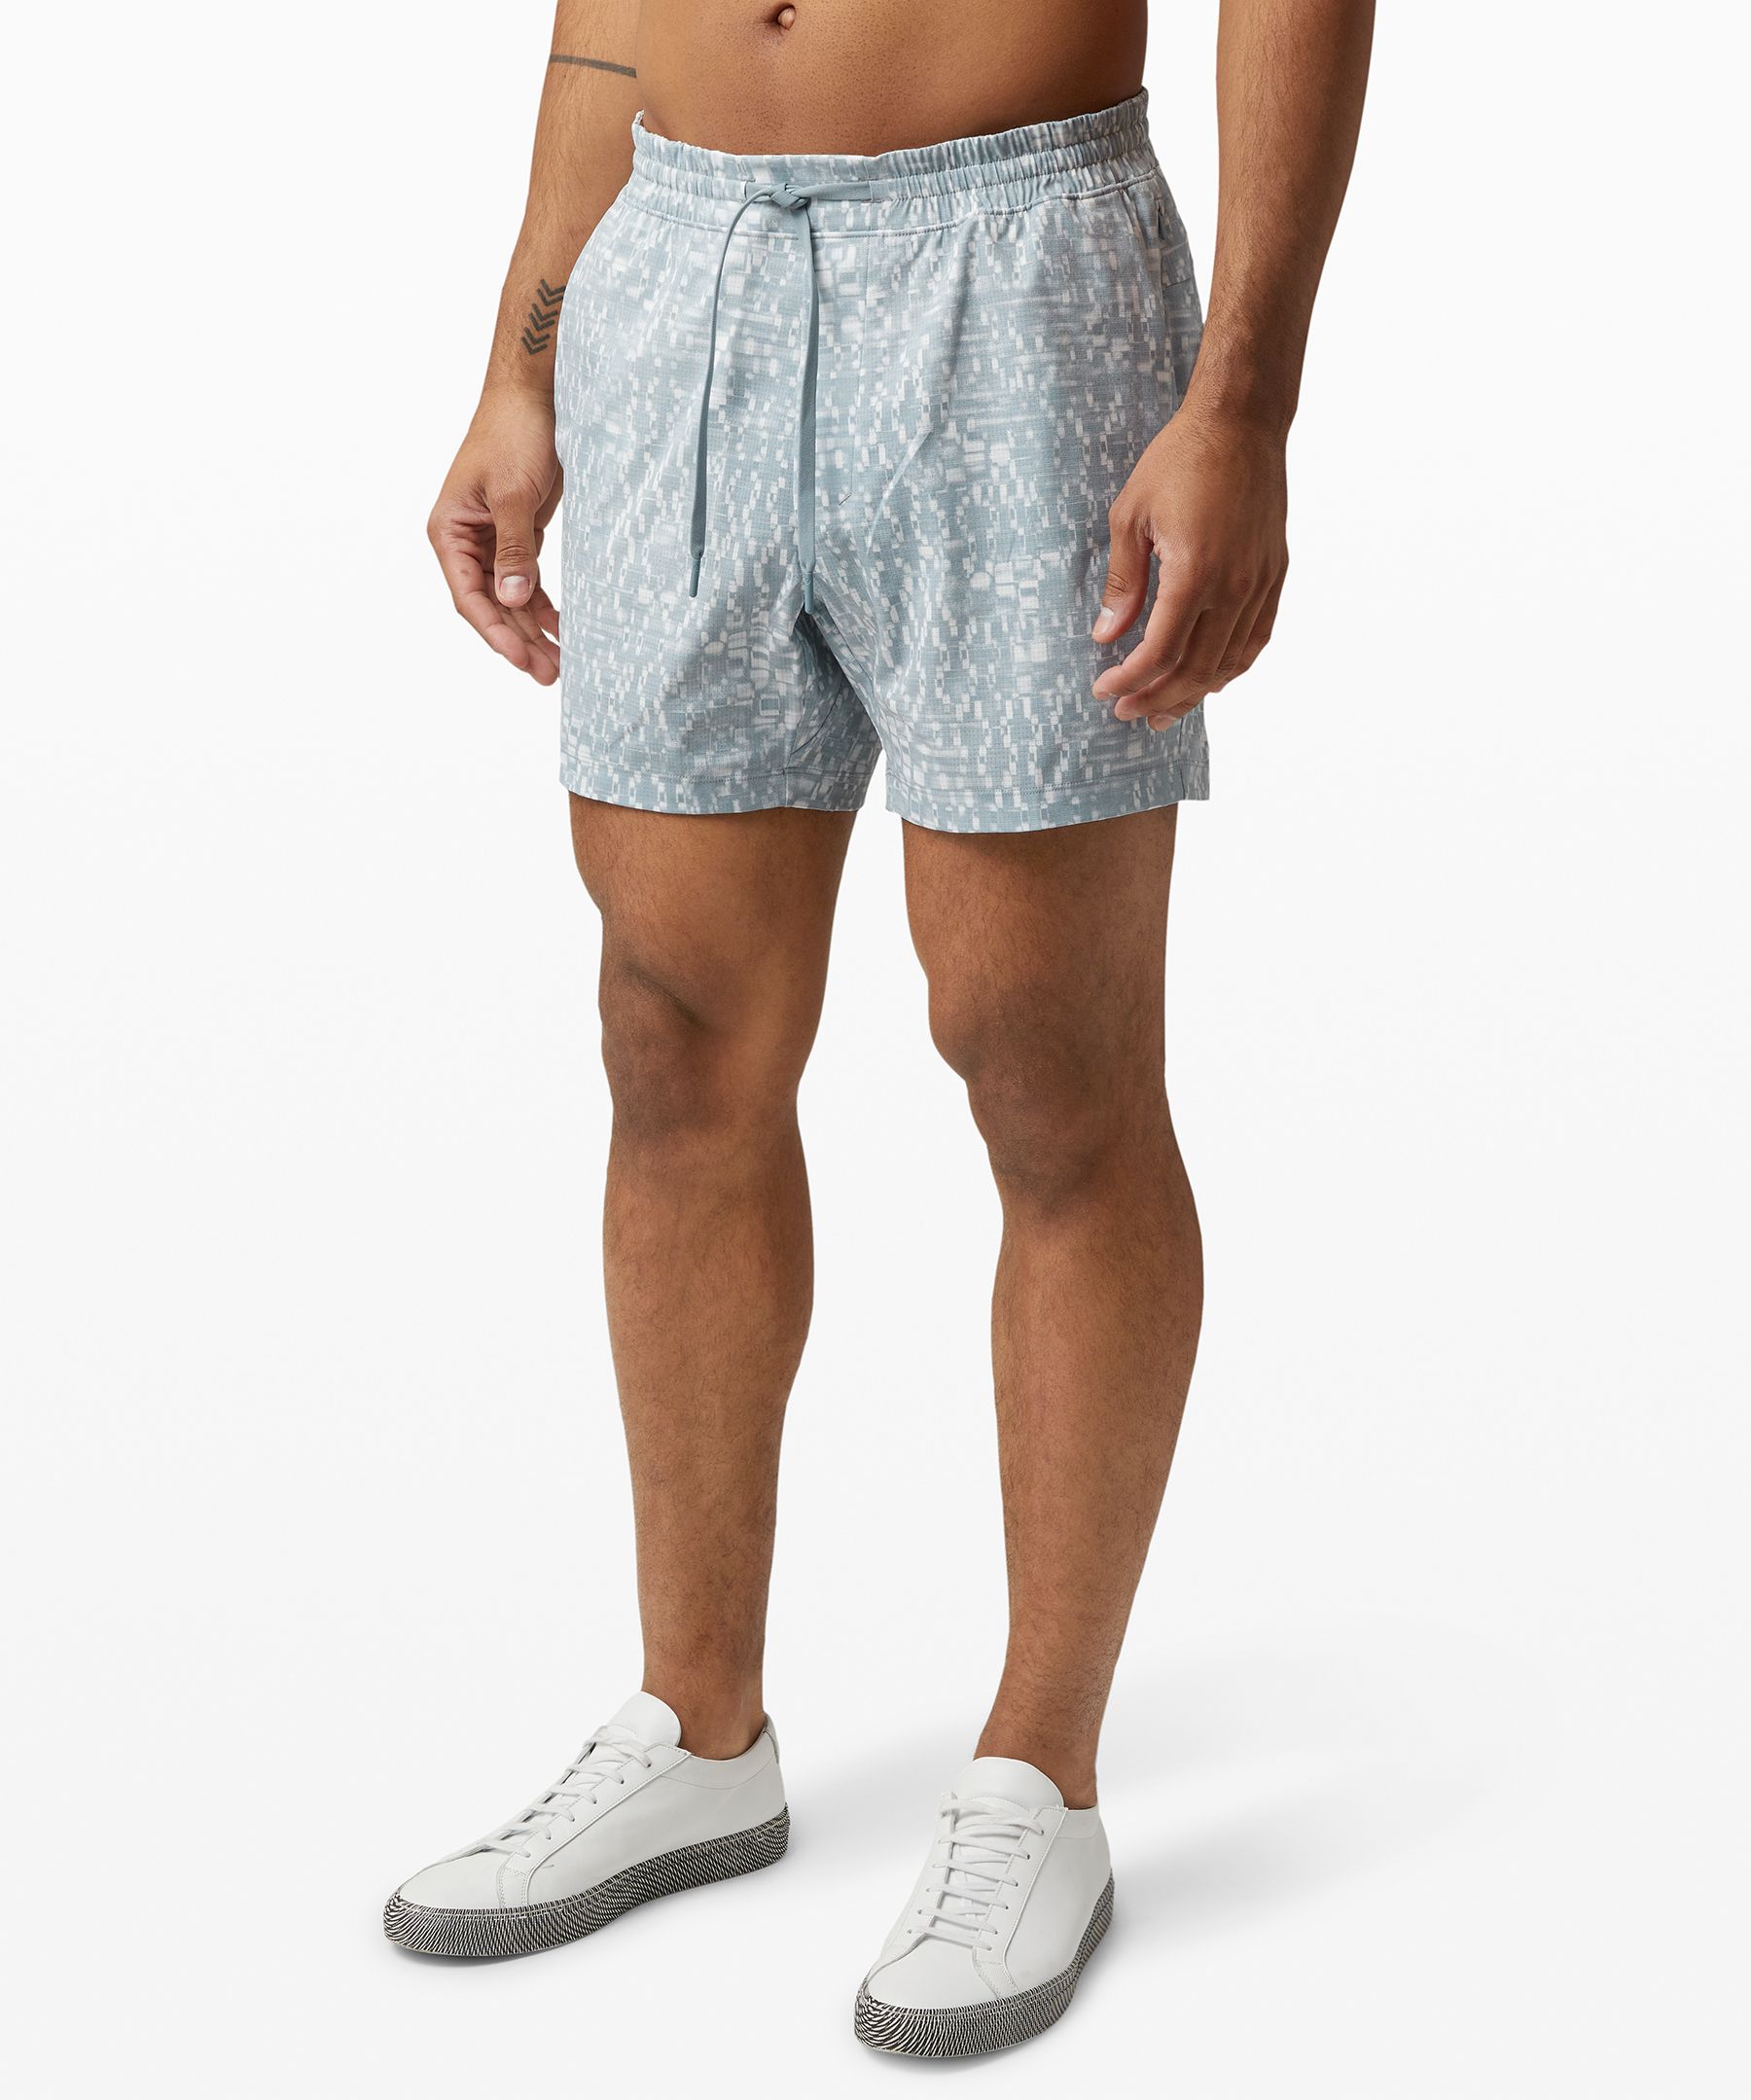 lululemon bowline shorts review